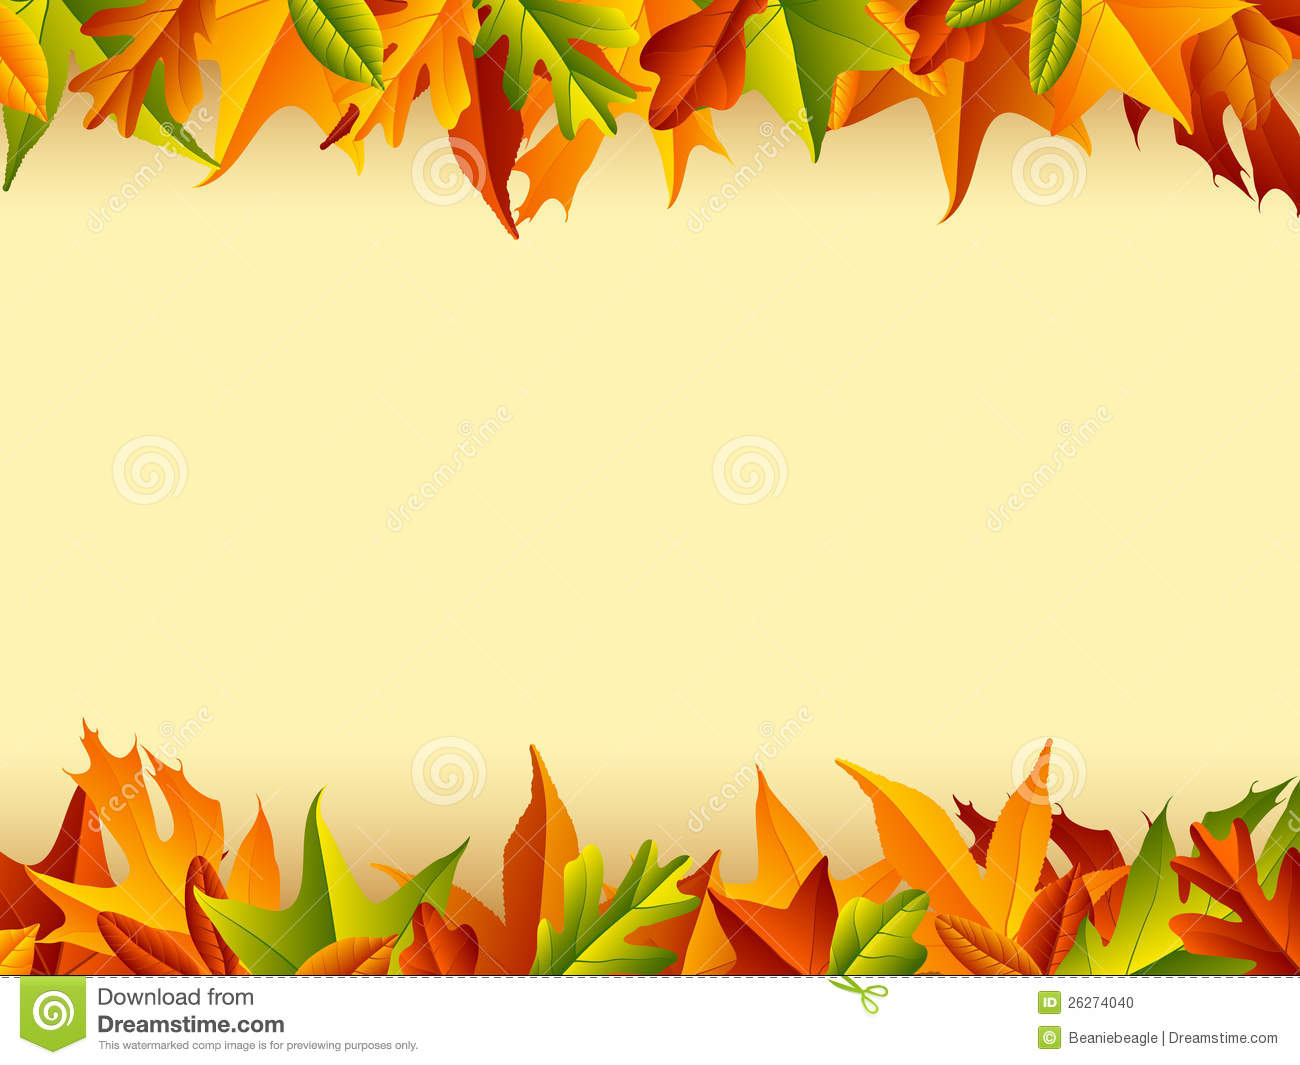 autumn images background #1